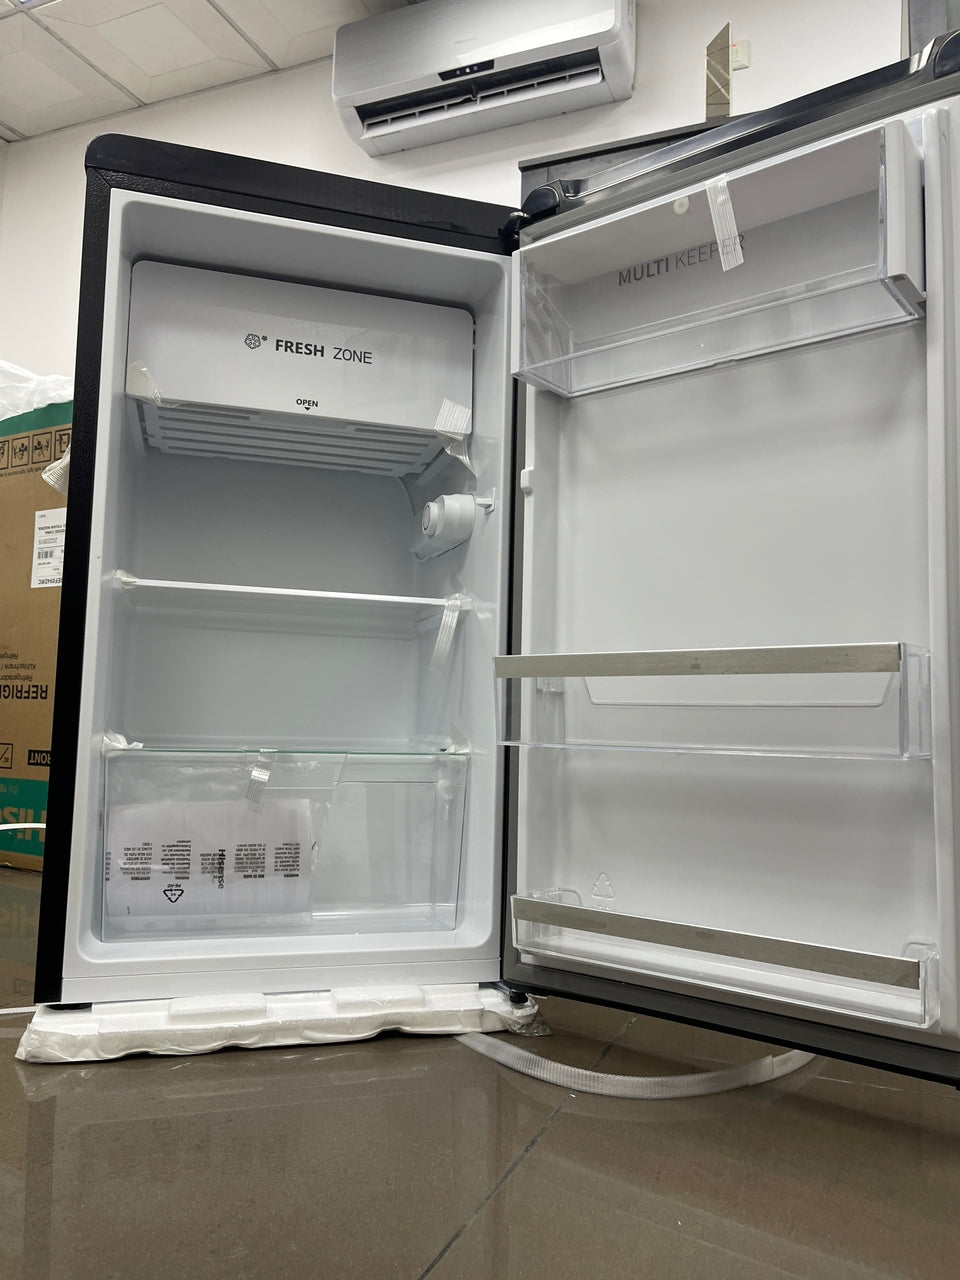 Hisense REF-094DRC 93 Litres Single Door Refrigerator